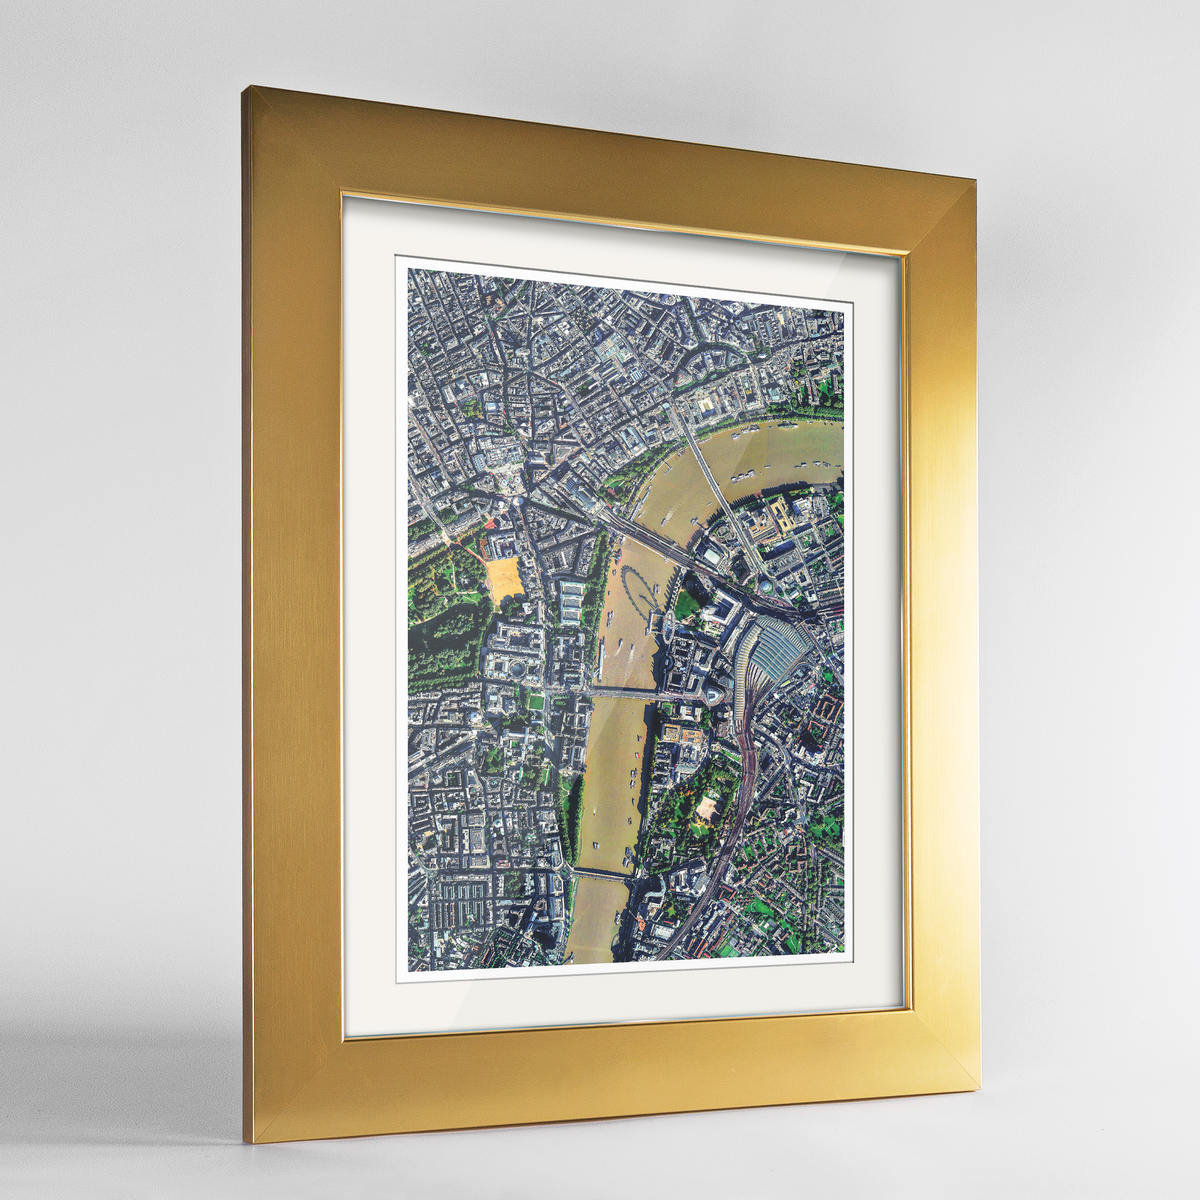 Central London Earth Photography Art Print - Framed